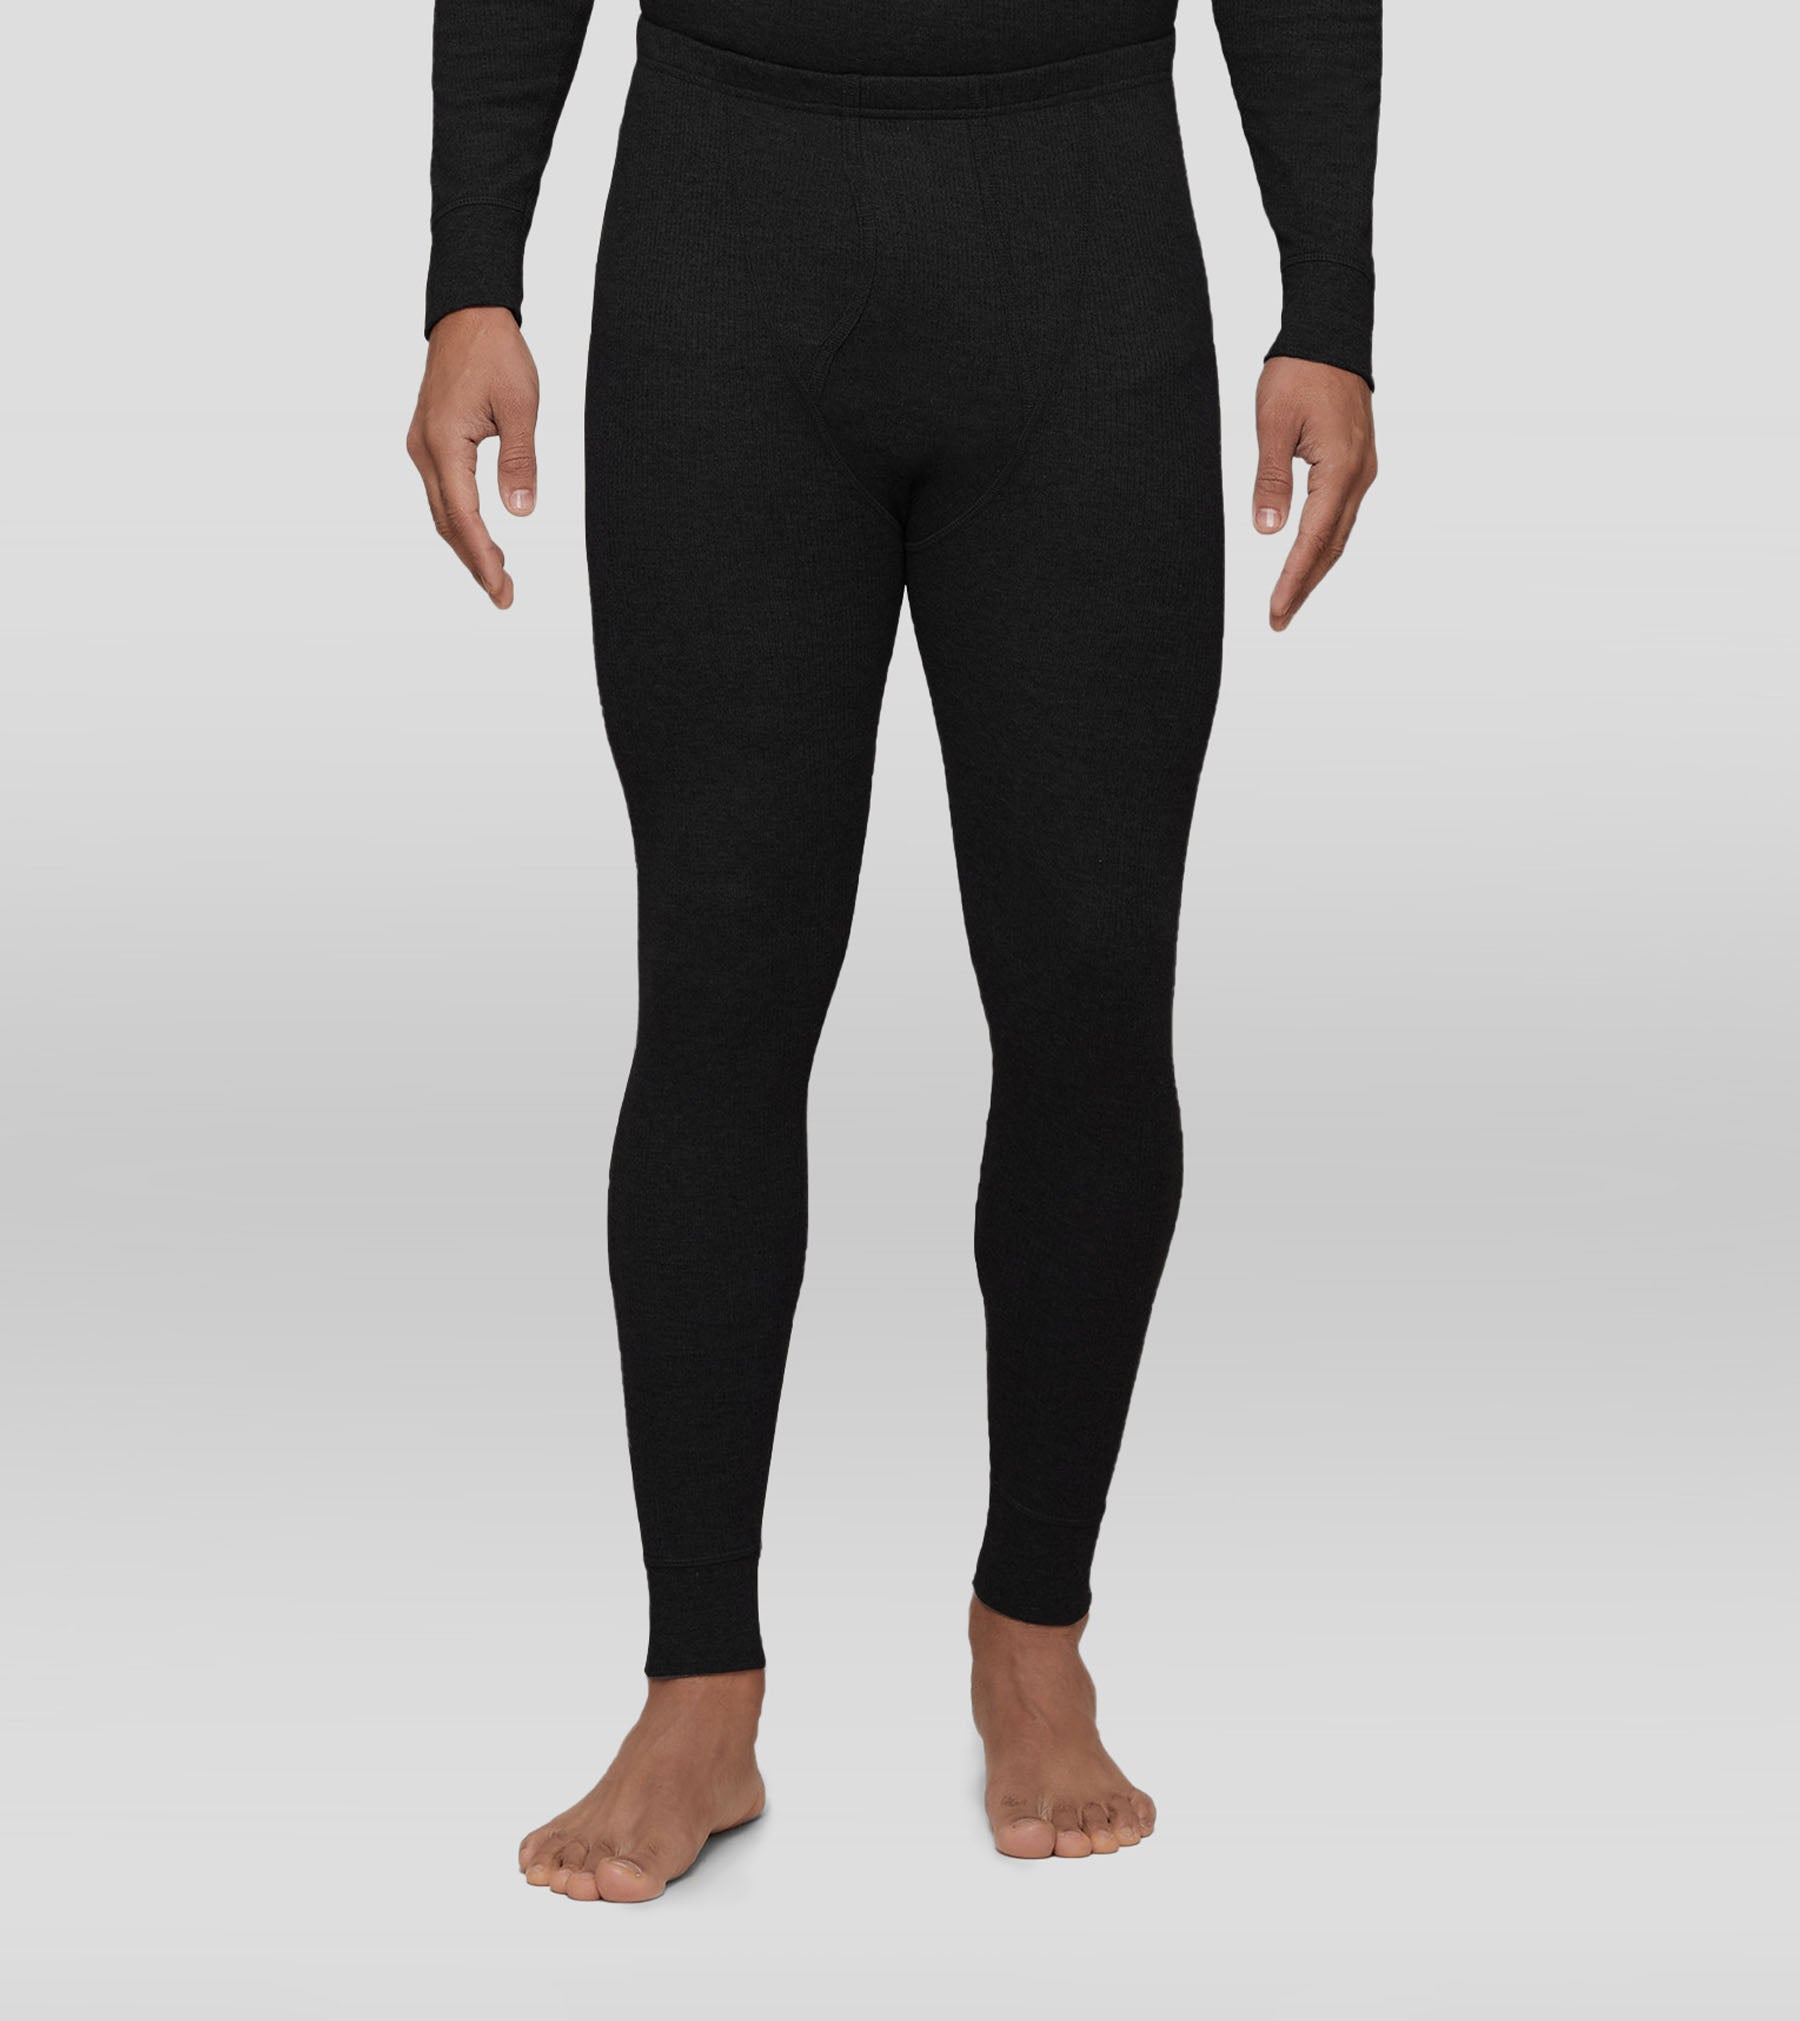 Ladies Thermal Underwear (Black) - Long John, Shop Today. Get it Tomorrow!